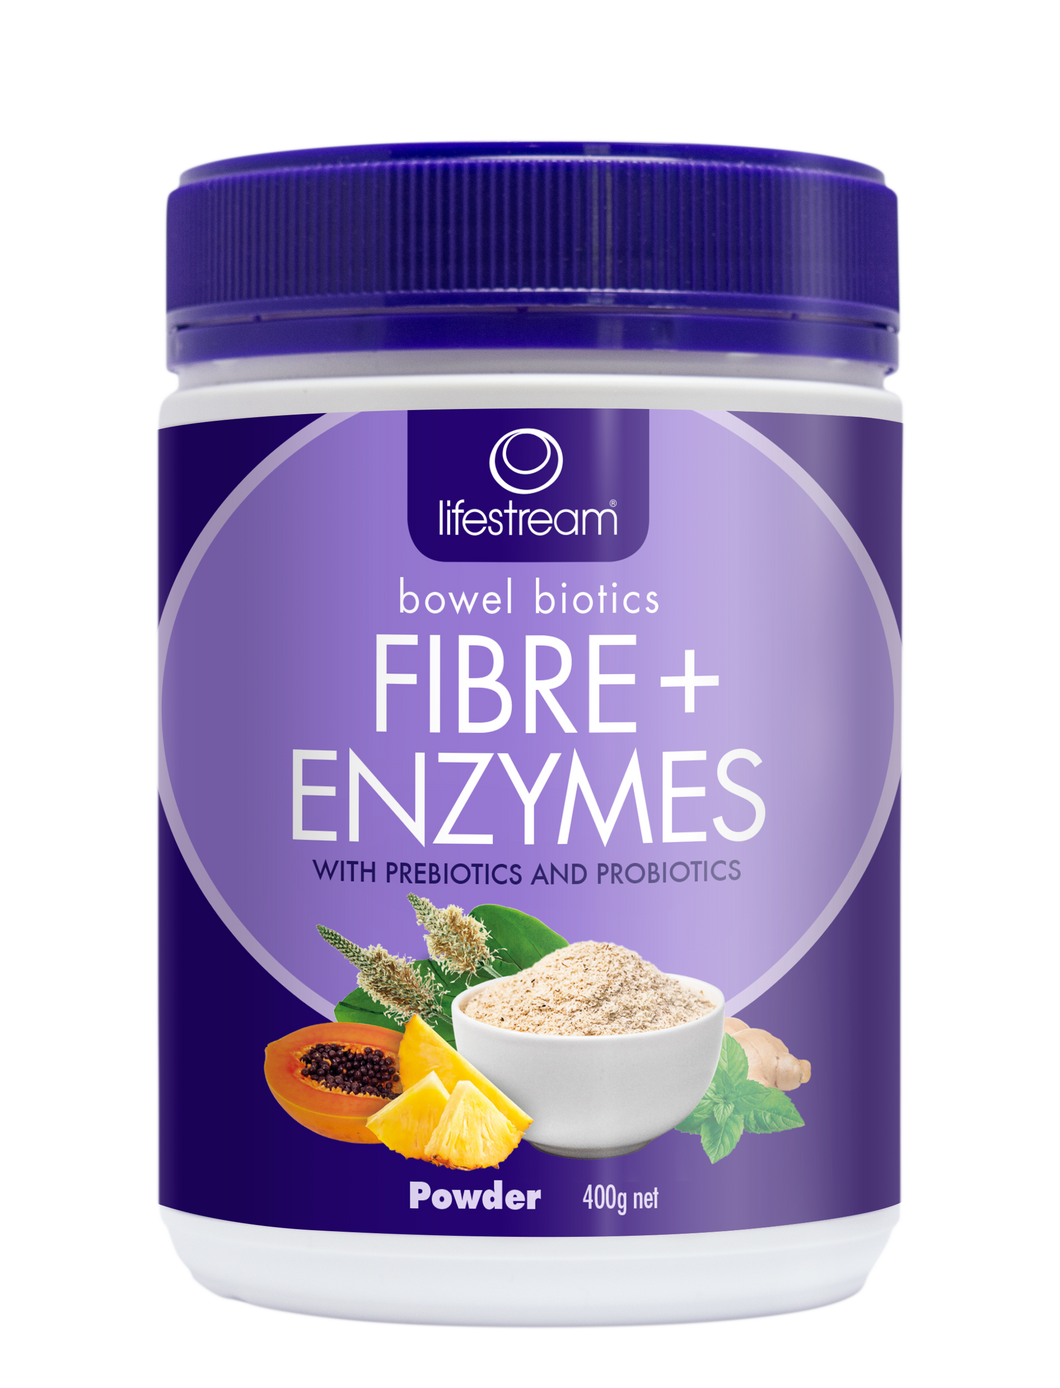 Lifestream Bowel Biotics Fibre+ Enzymes 200 g